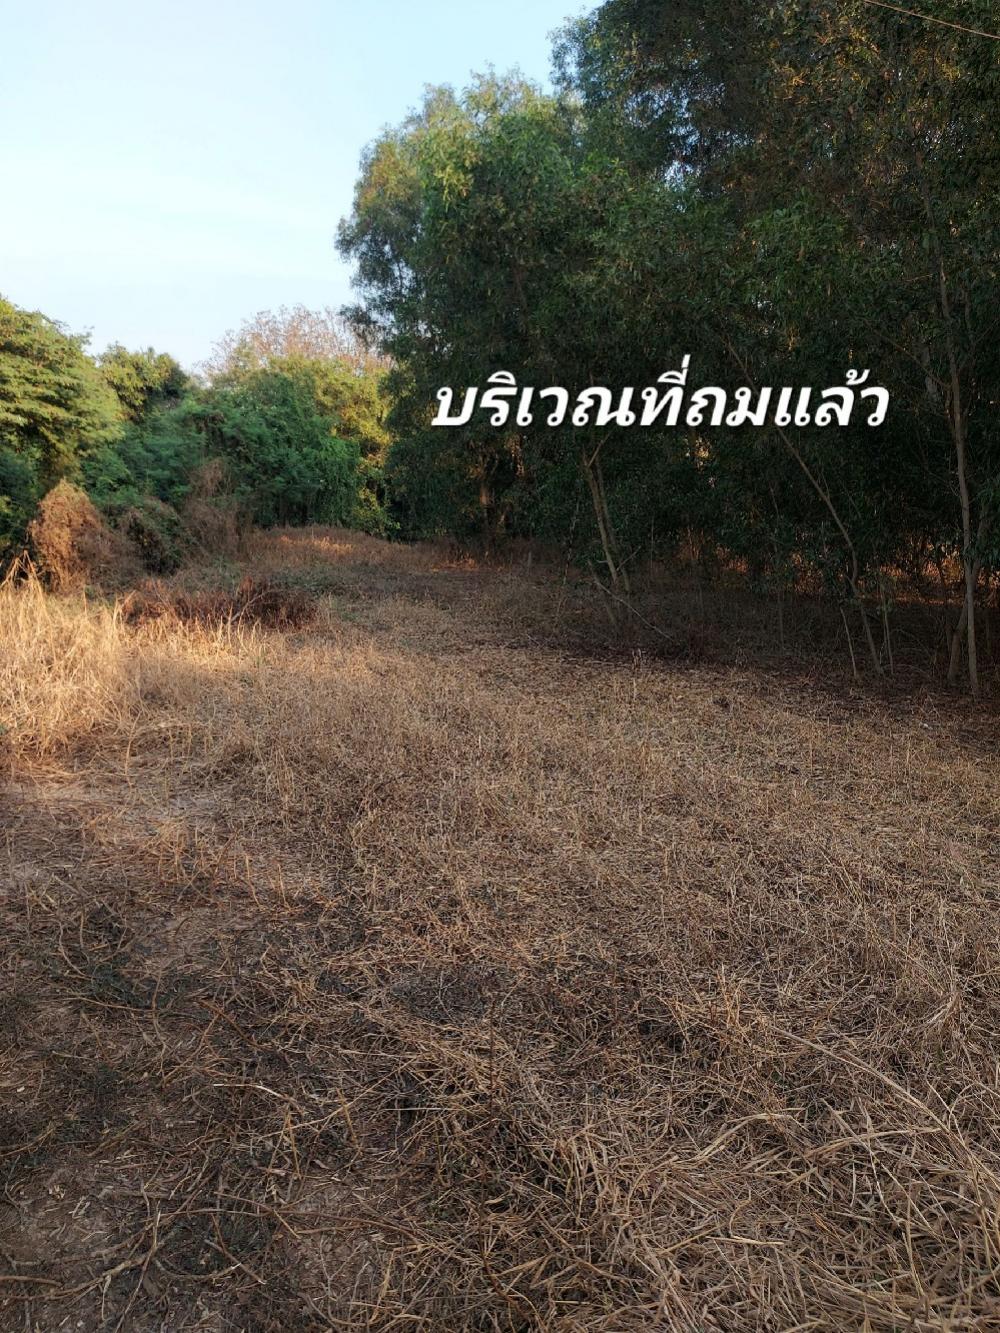 For SaleLandNakhon Pathom : Land in Nakhon Chai Si, 2-1-27 rai, near Bangkok, beautiful plot, already filled, along the road and canal. Near the Tha Chin River, convenient travel.